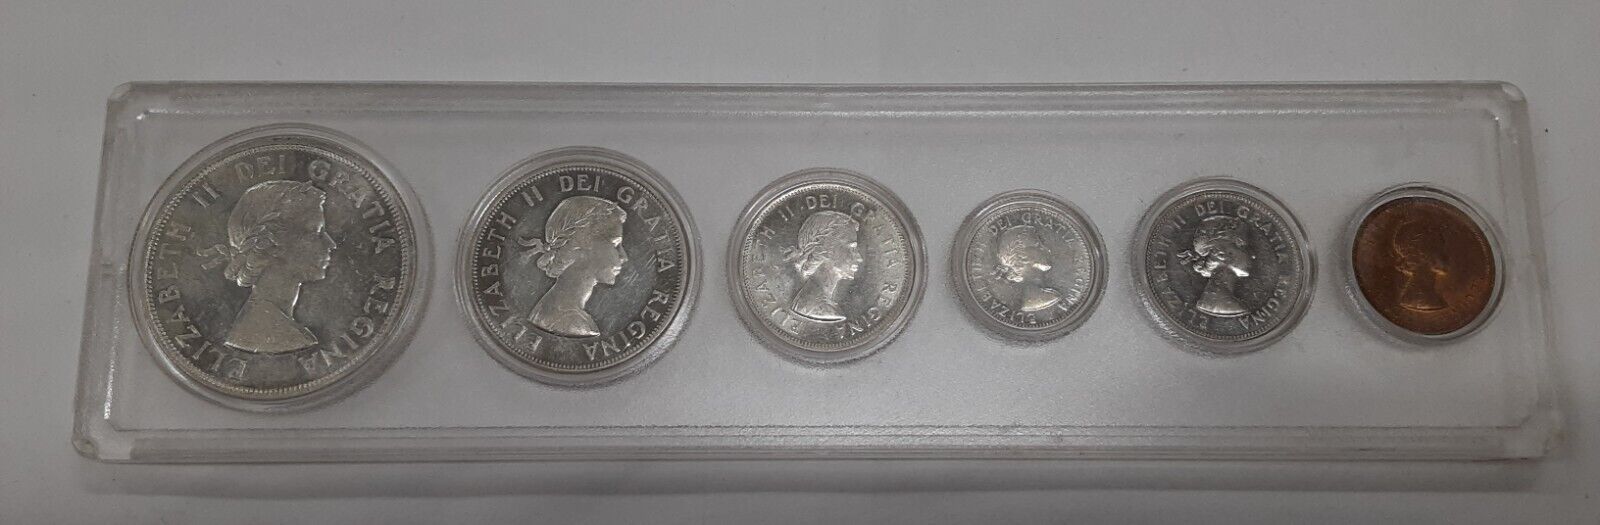 1964 Canada 6 Coin Mint Set of Queen Elizabeth II BU in Whitman Holder